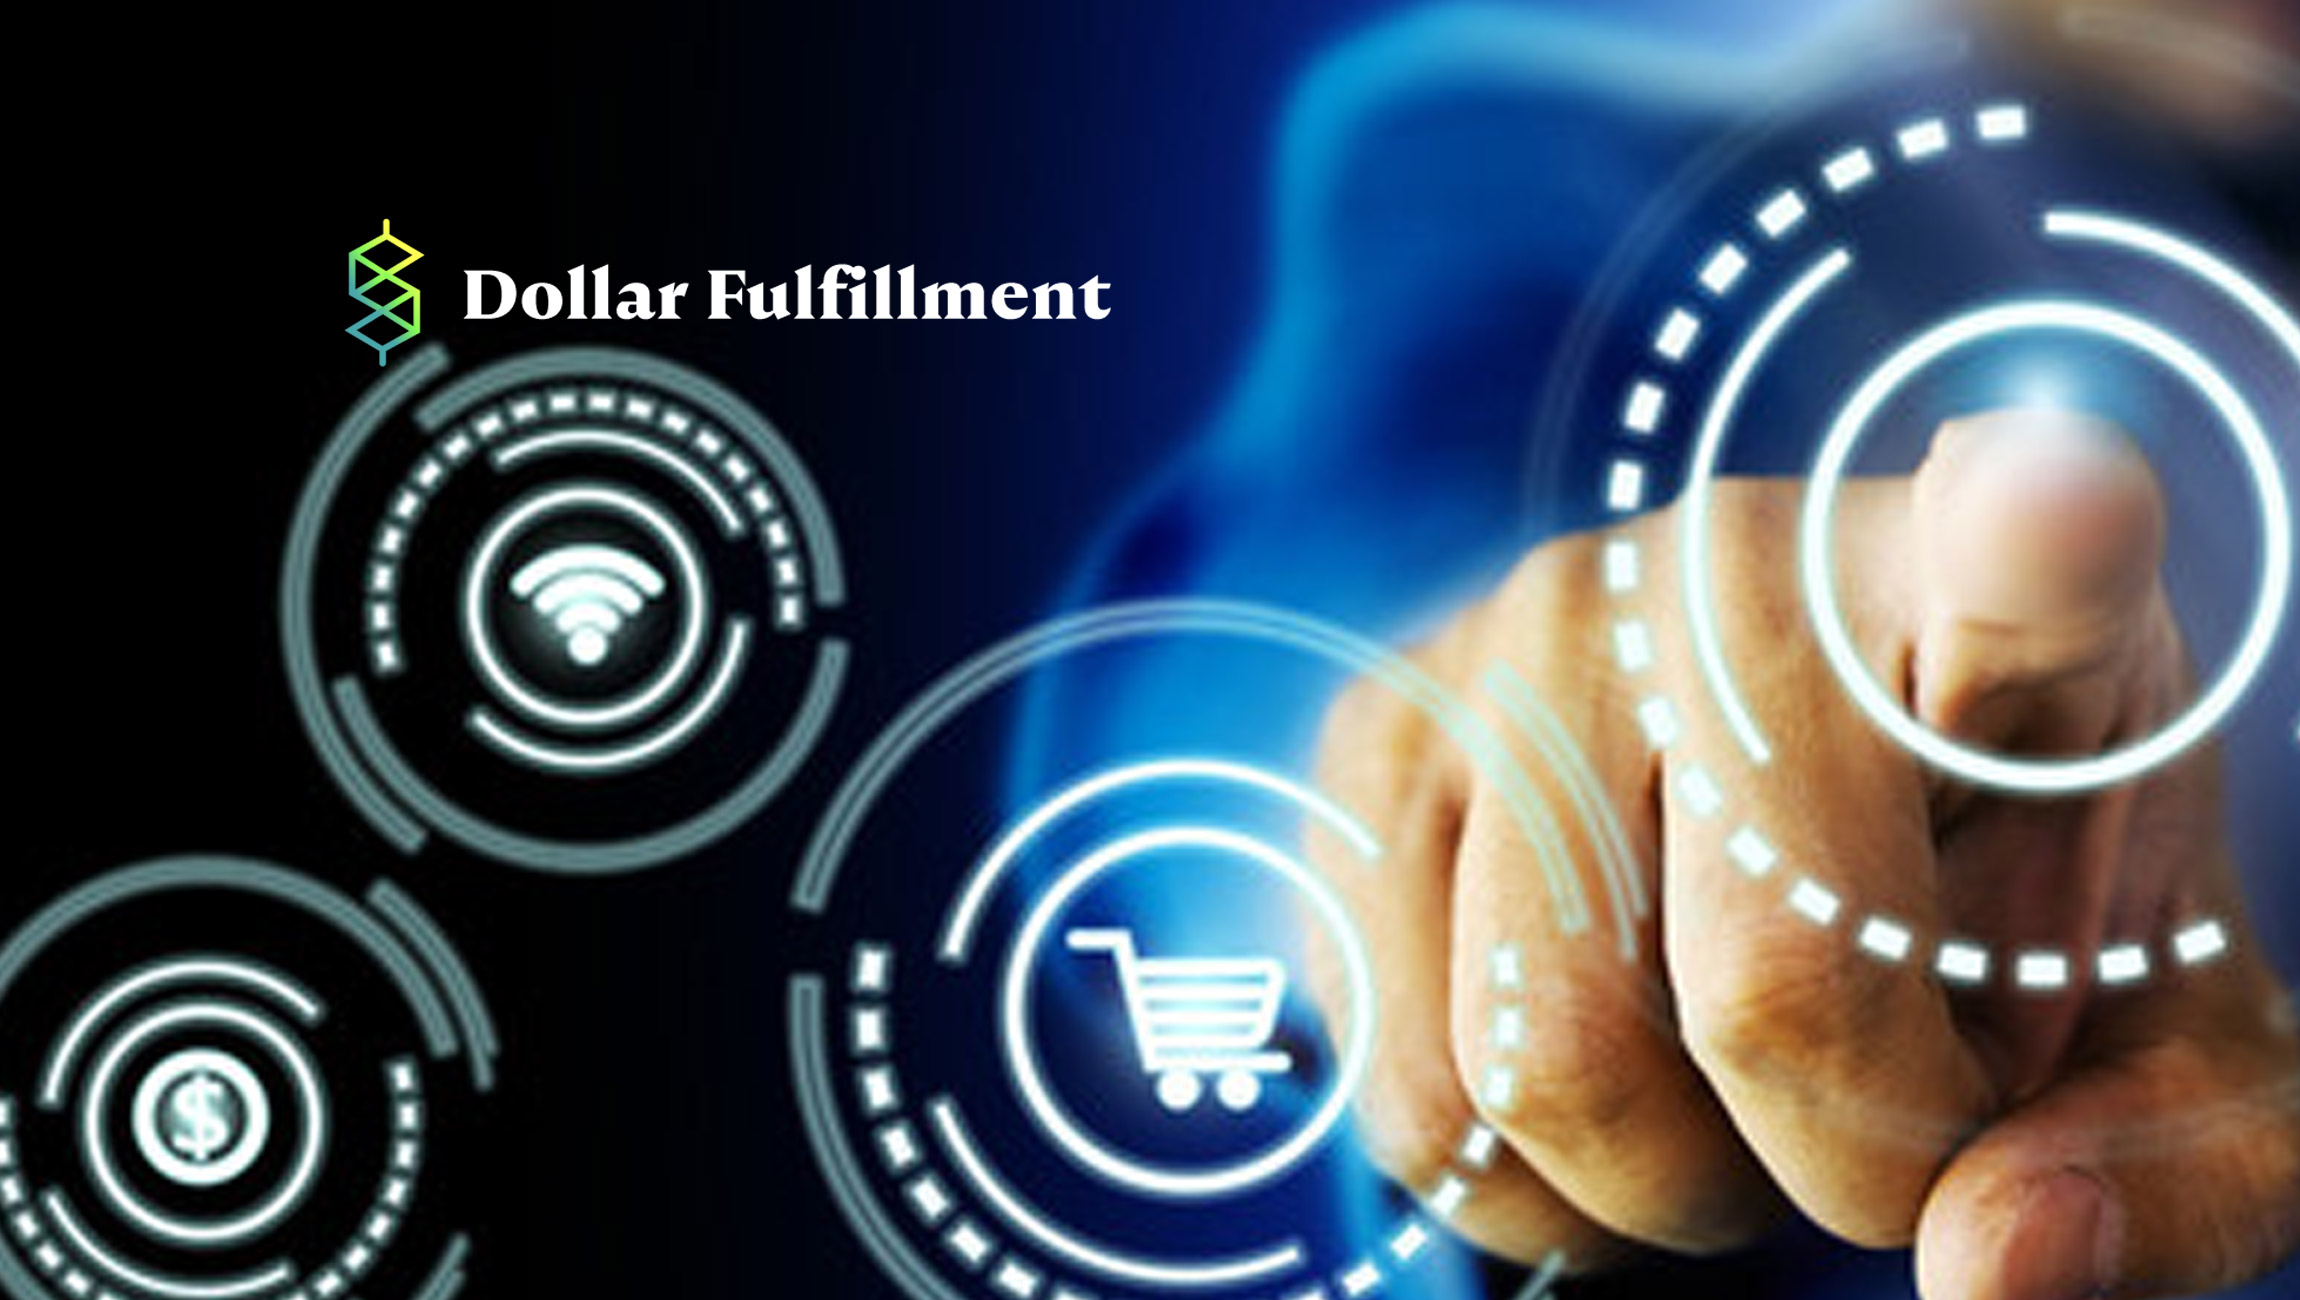 Dollar Fulfillment and Ships-a-Lot Unite to Transform E-commerce Order Fulfillment for Entrepreneurs and Enterprise Companies